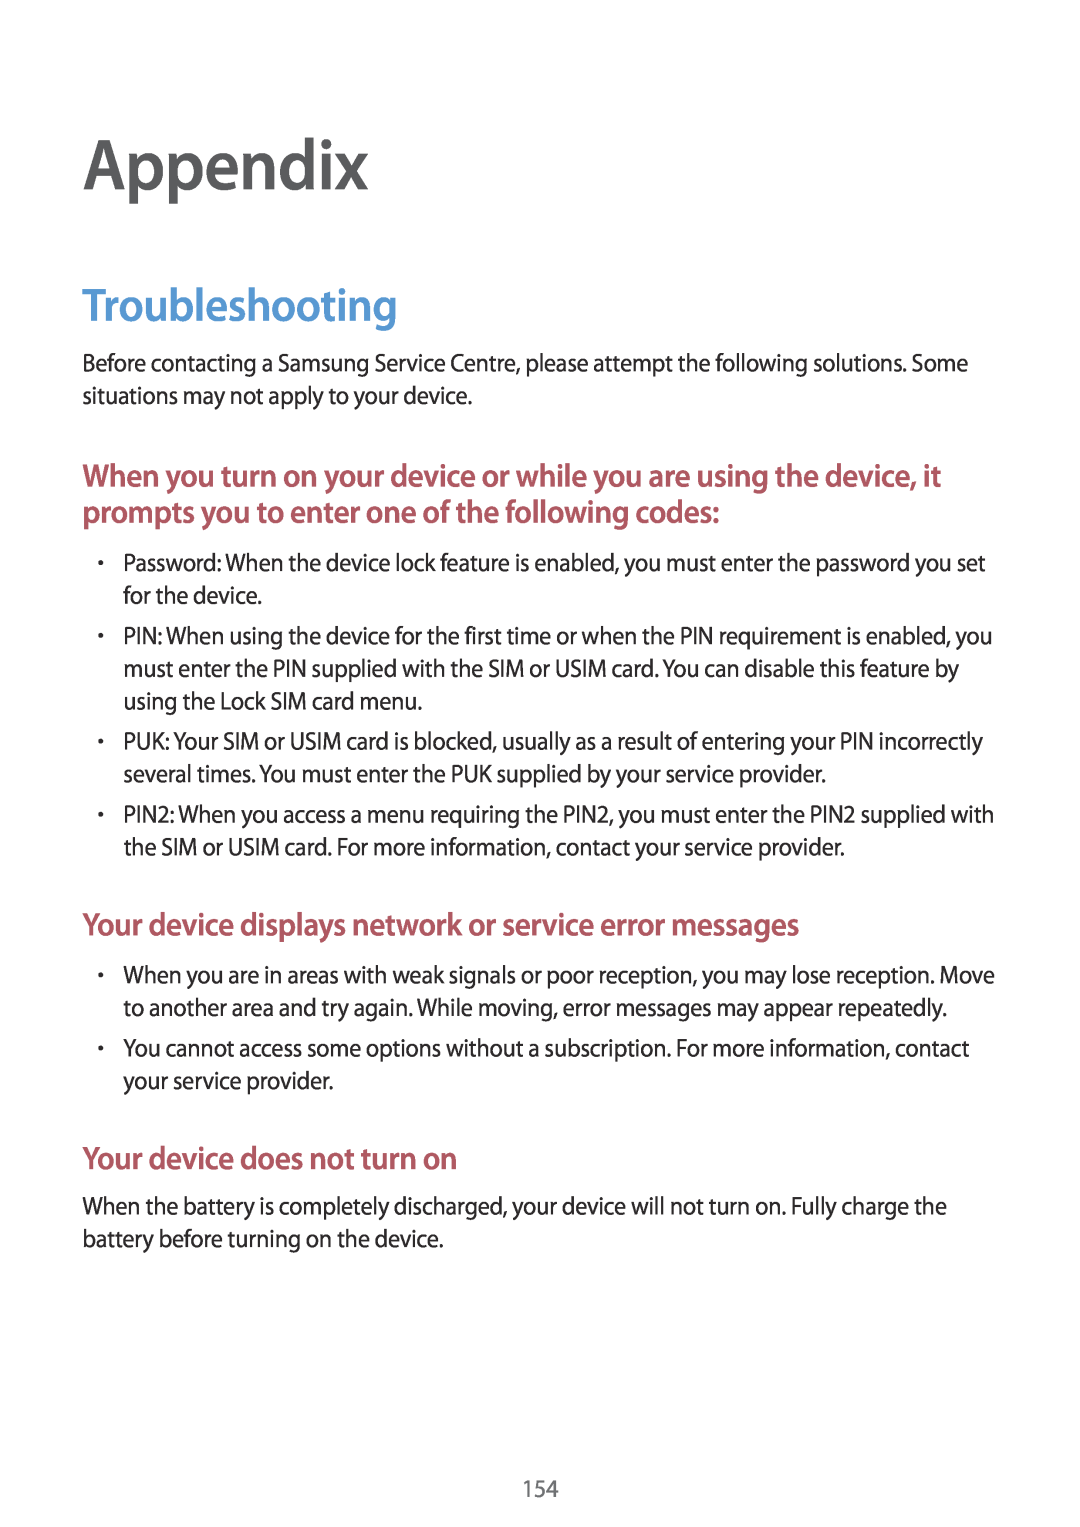 Samsung SM-A720FZBDKSA, SM-A520FZIADBT Appendix, Troubleshooting, Your device displays network or service error messages 